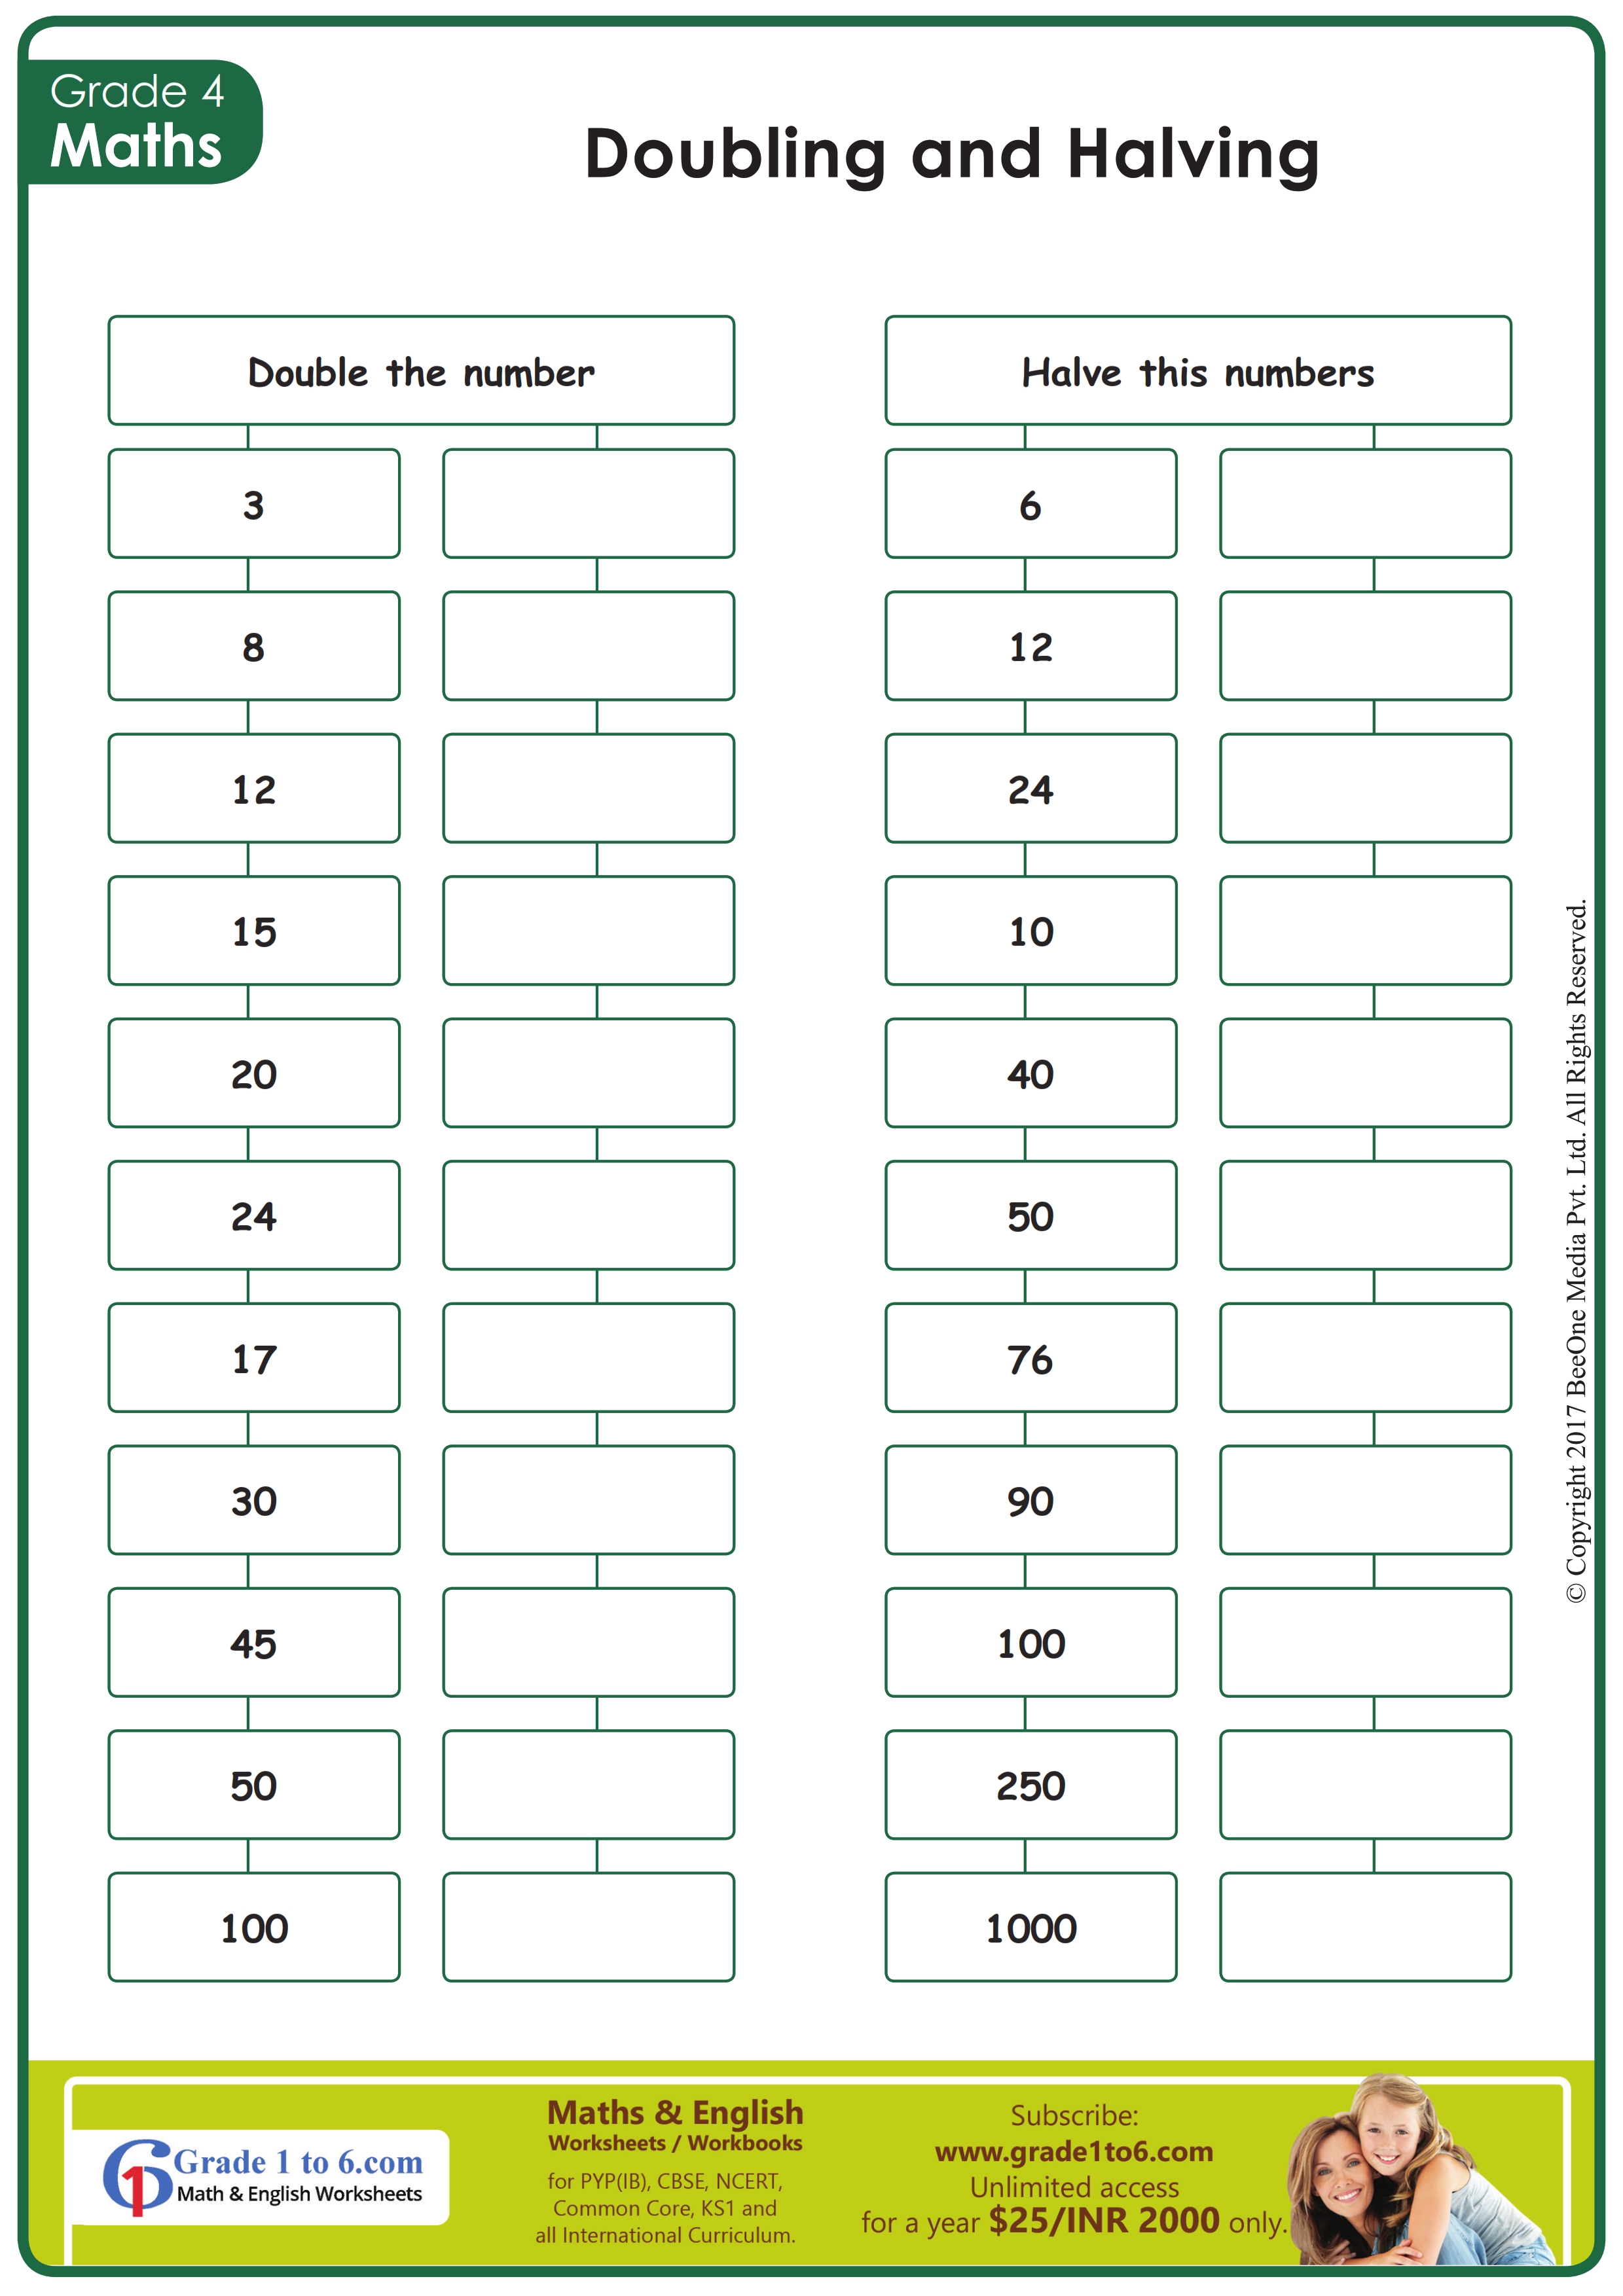 fun-activity-on-fractions-half-1-2-worksheets-for-children